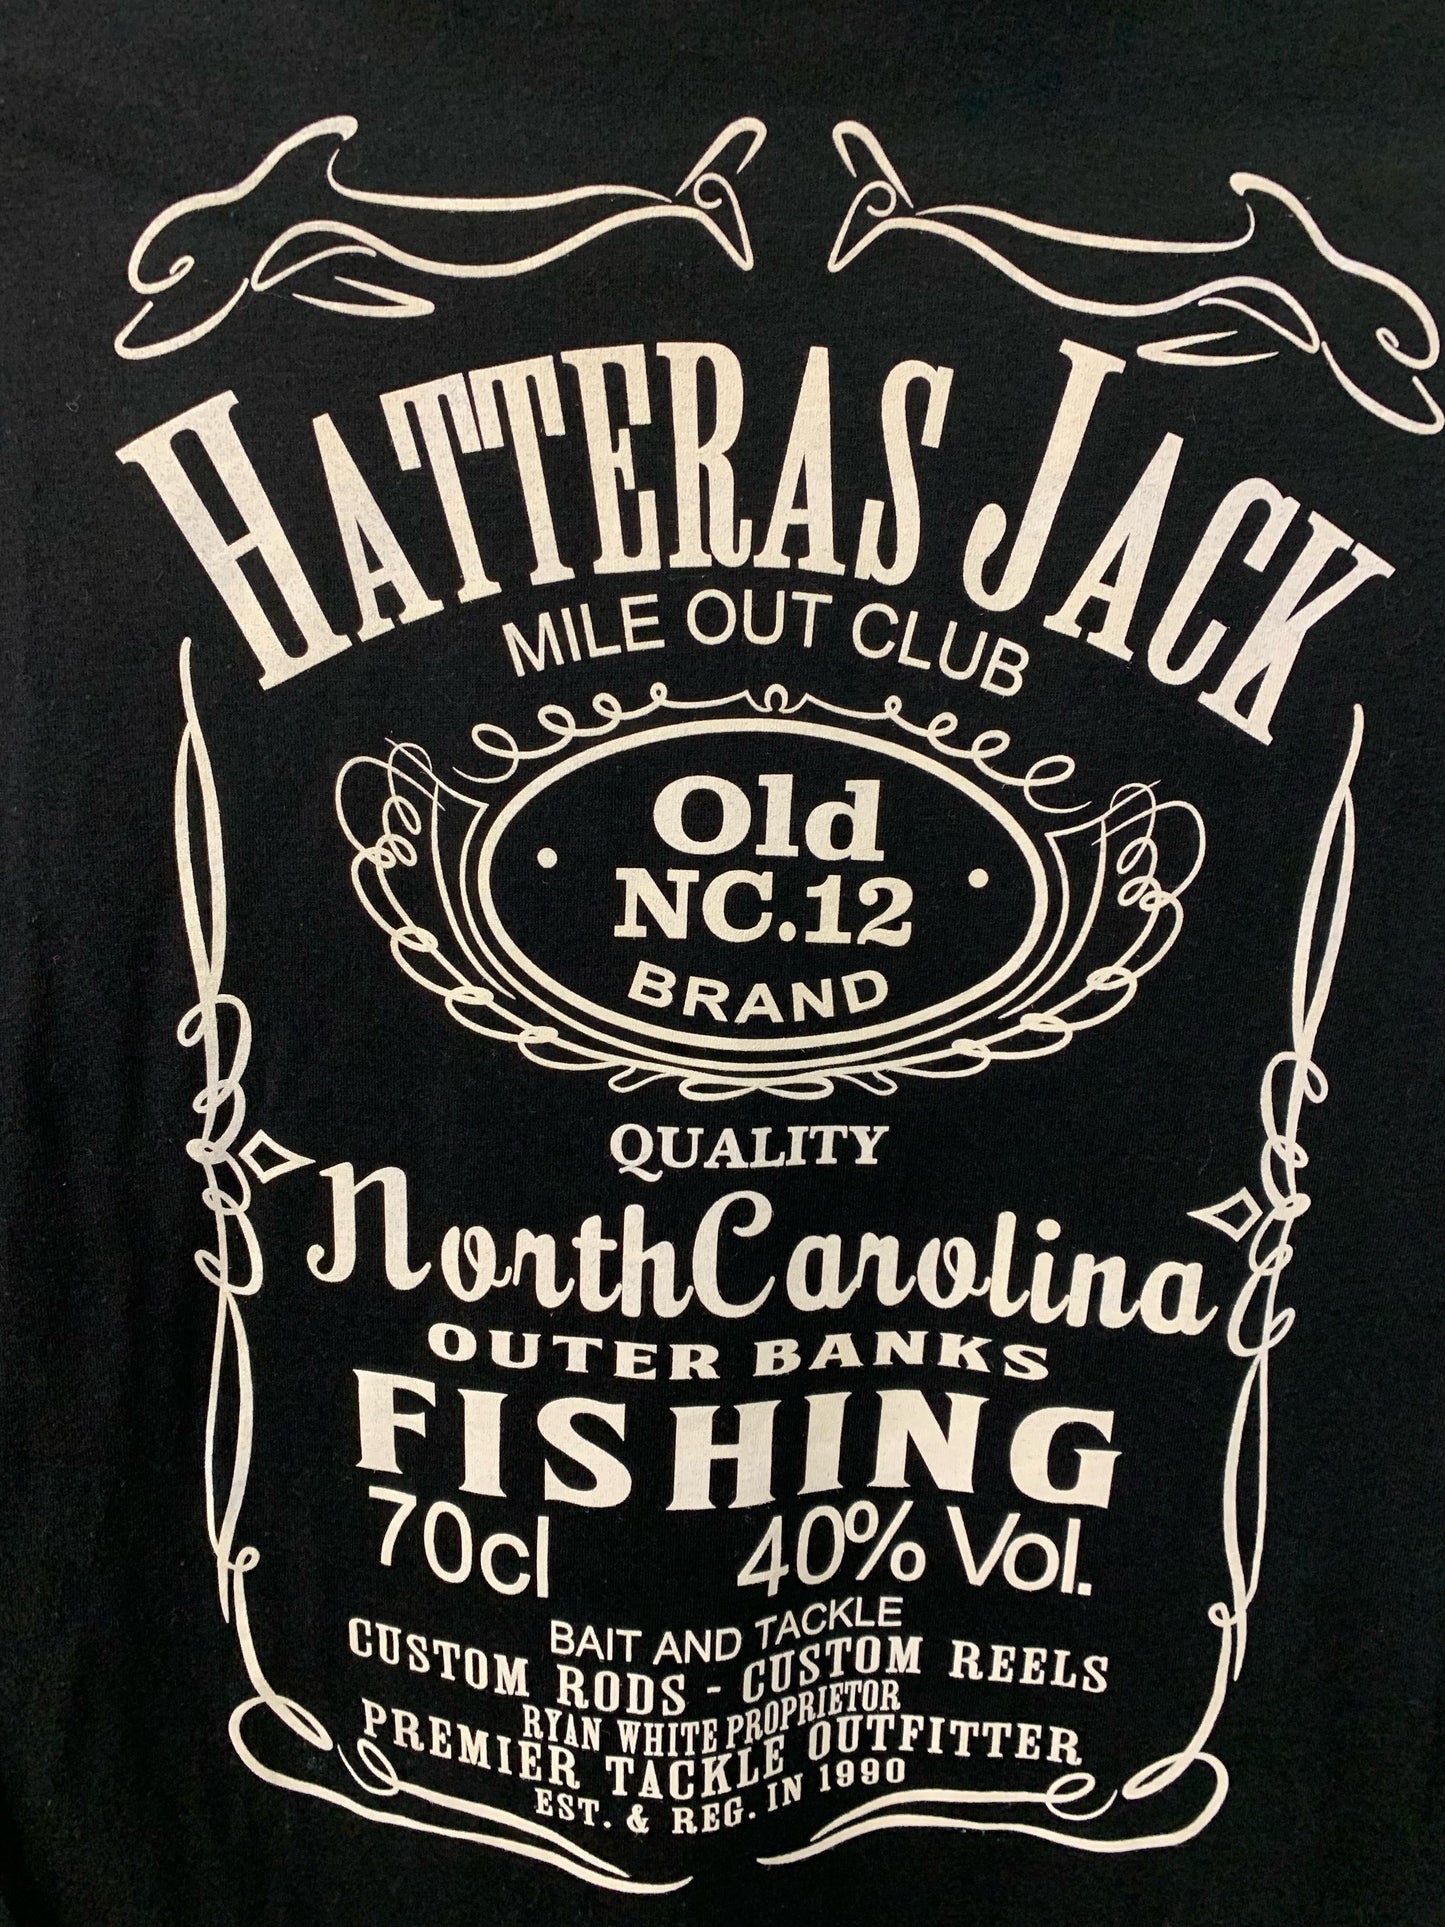 Hatteras Jack T-Shirt Whiskey